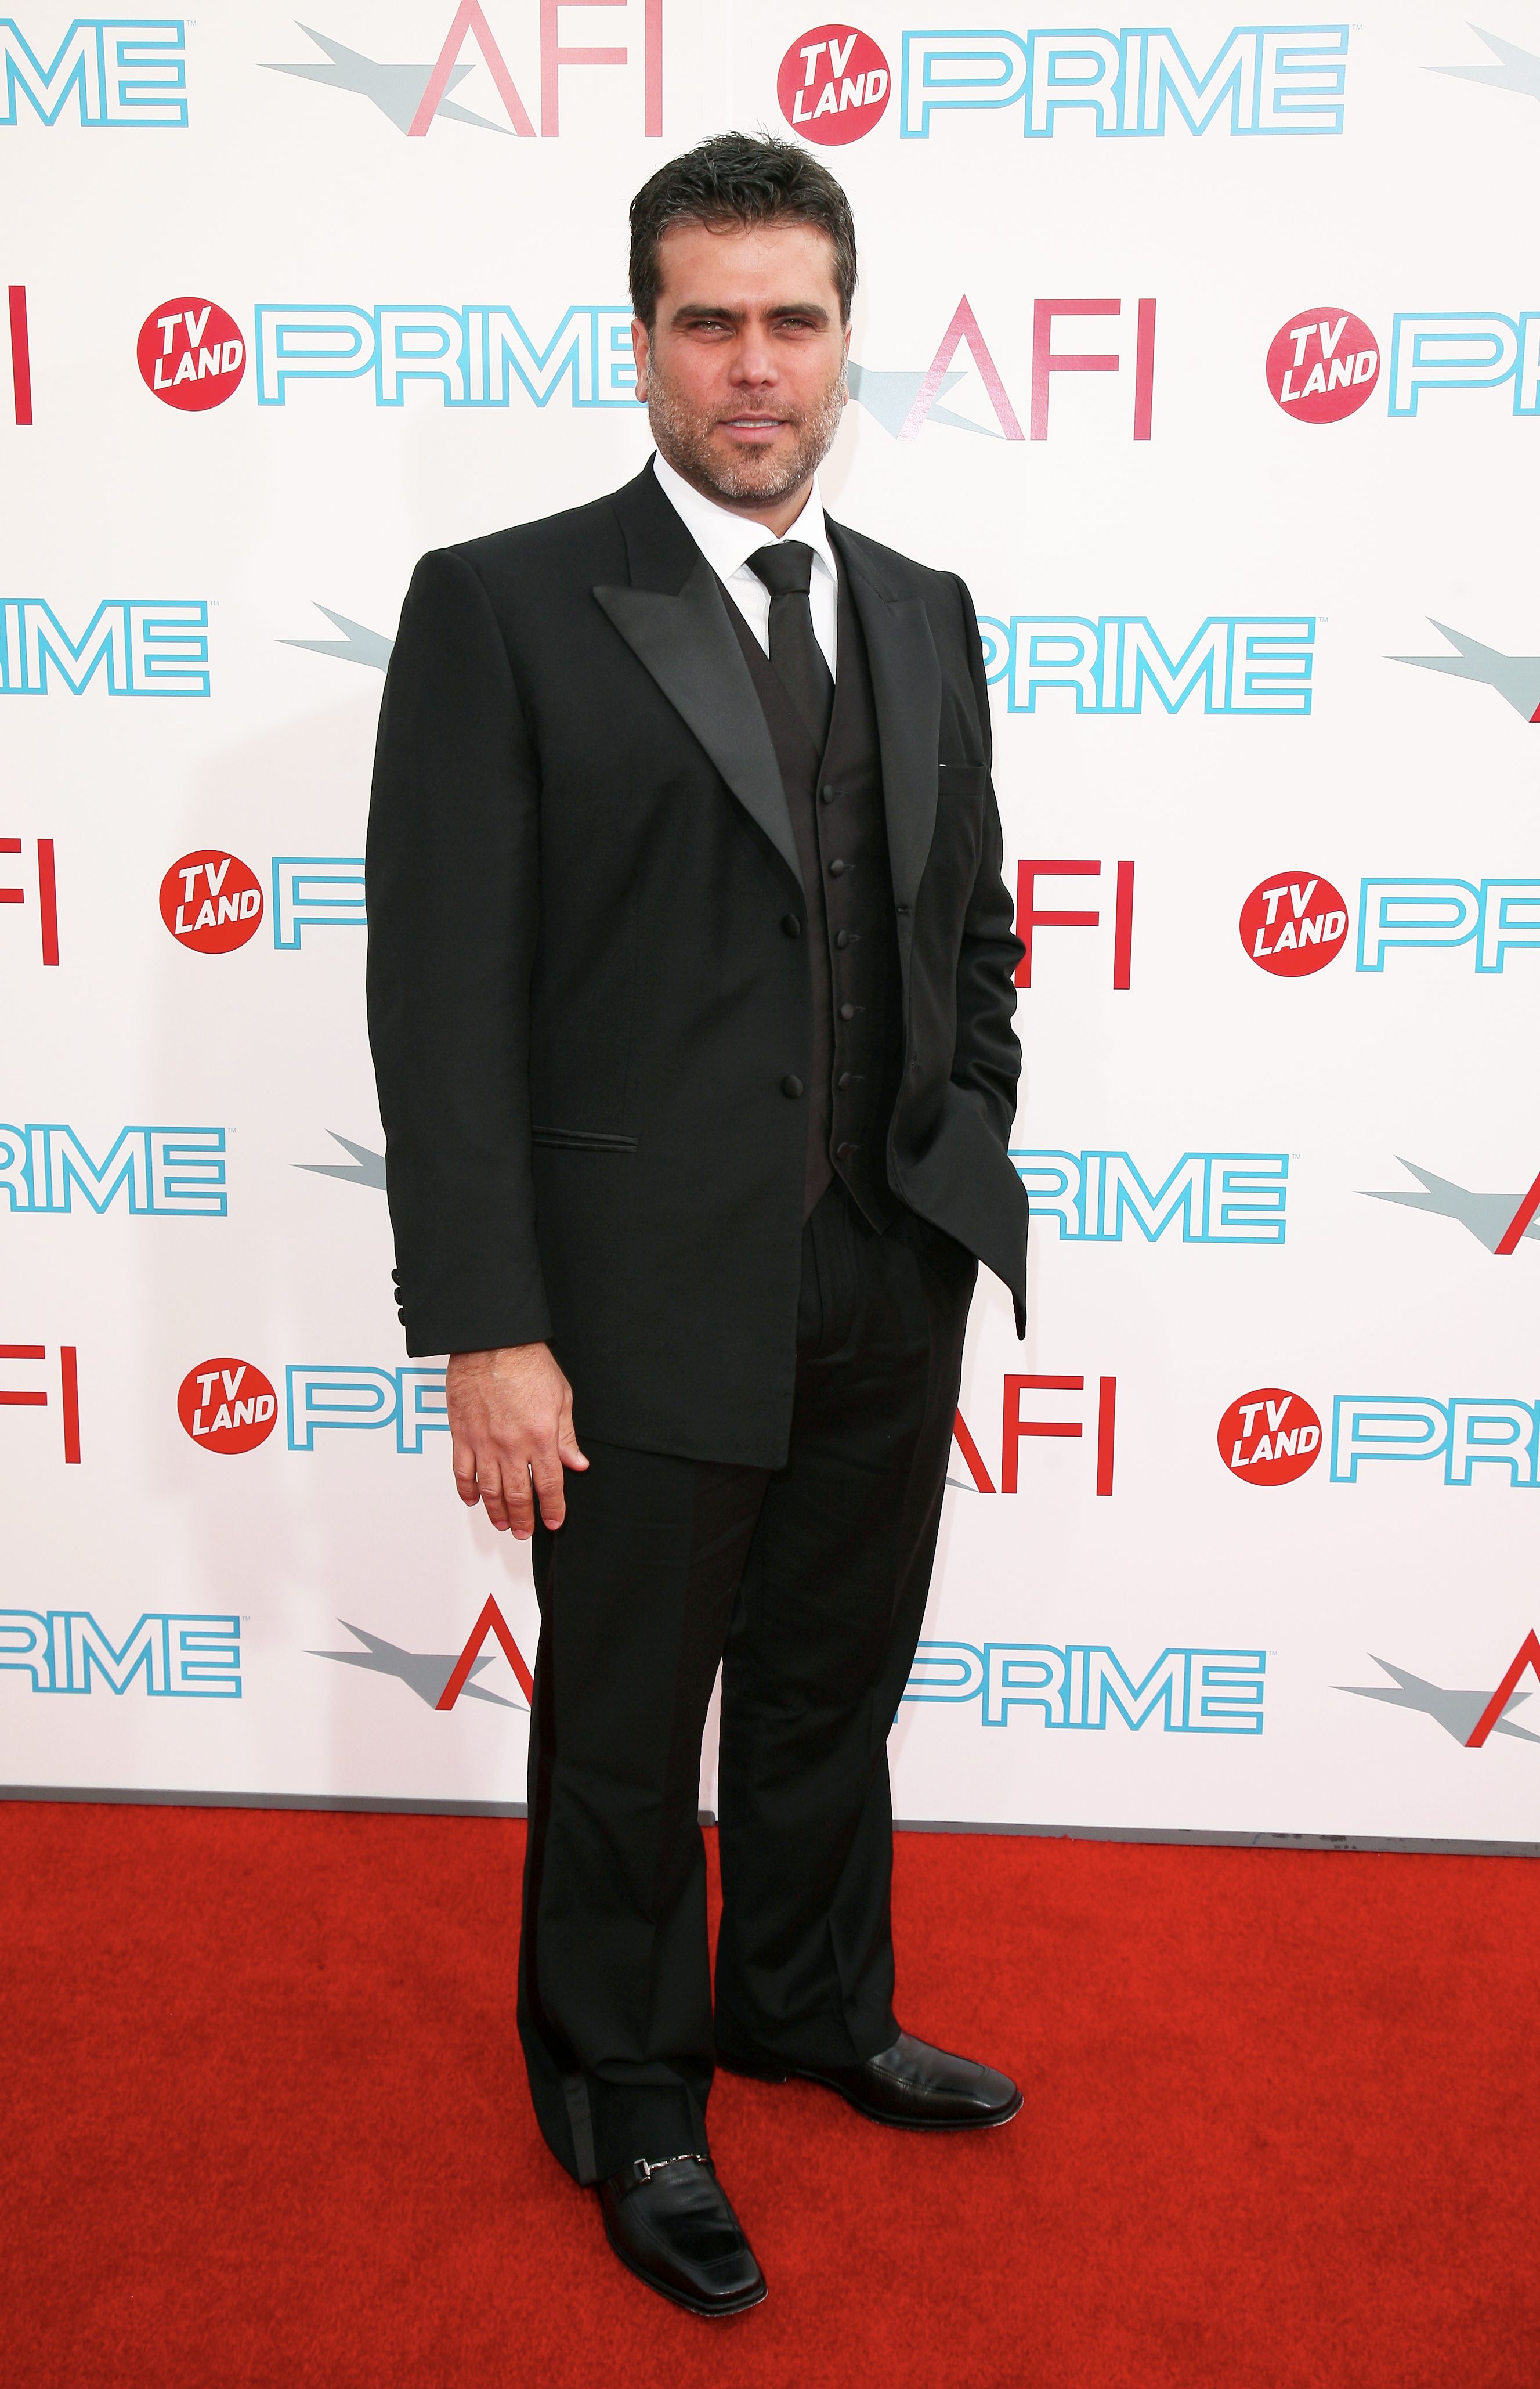 37th AFI Awards honoring Michael Douglas